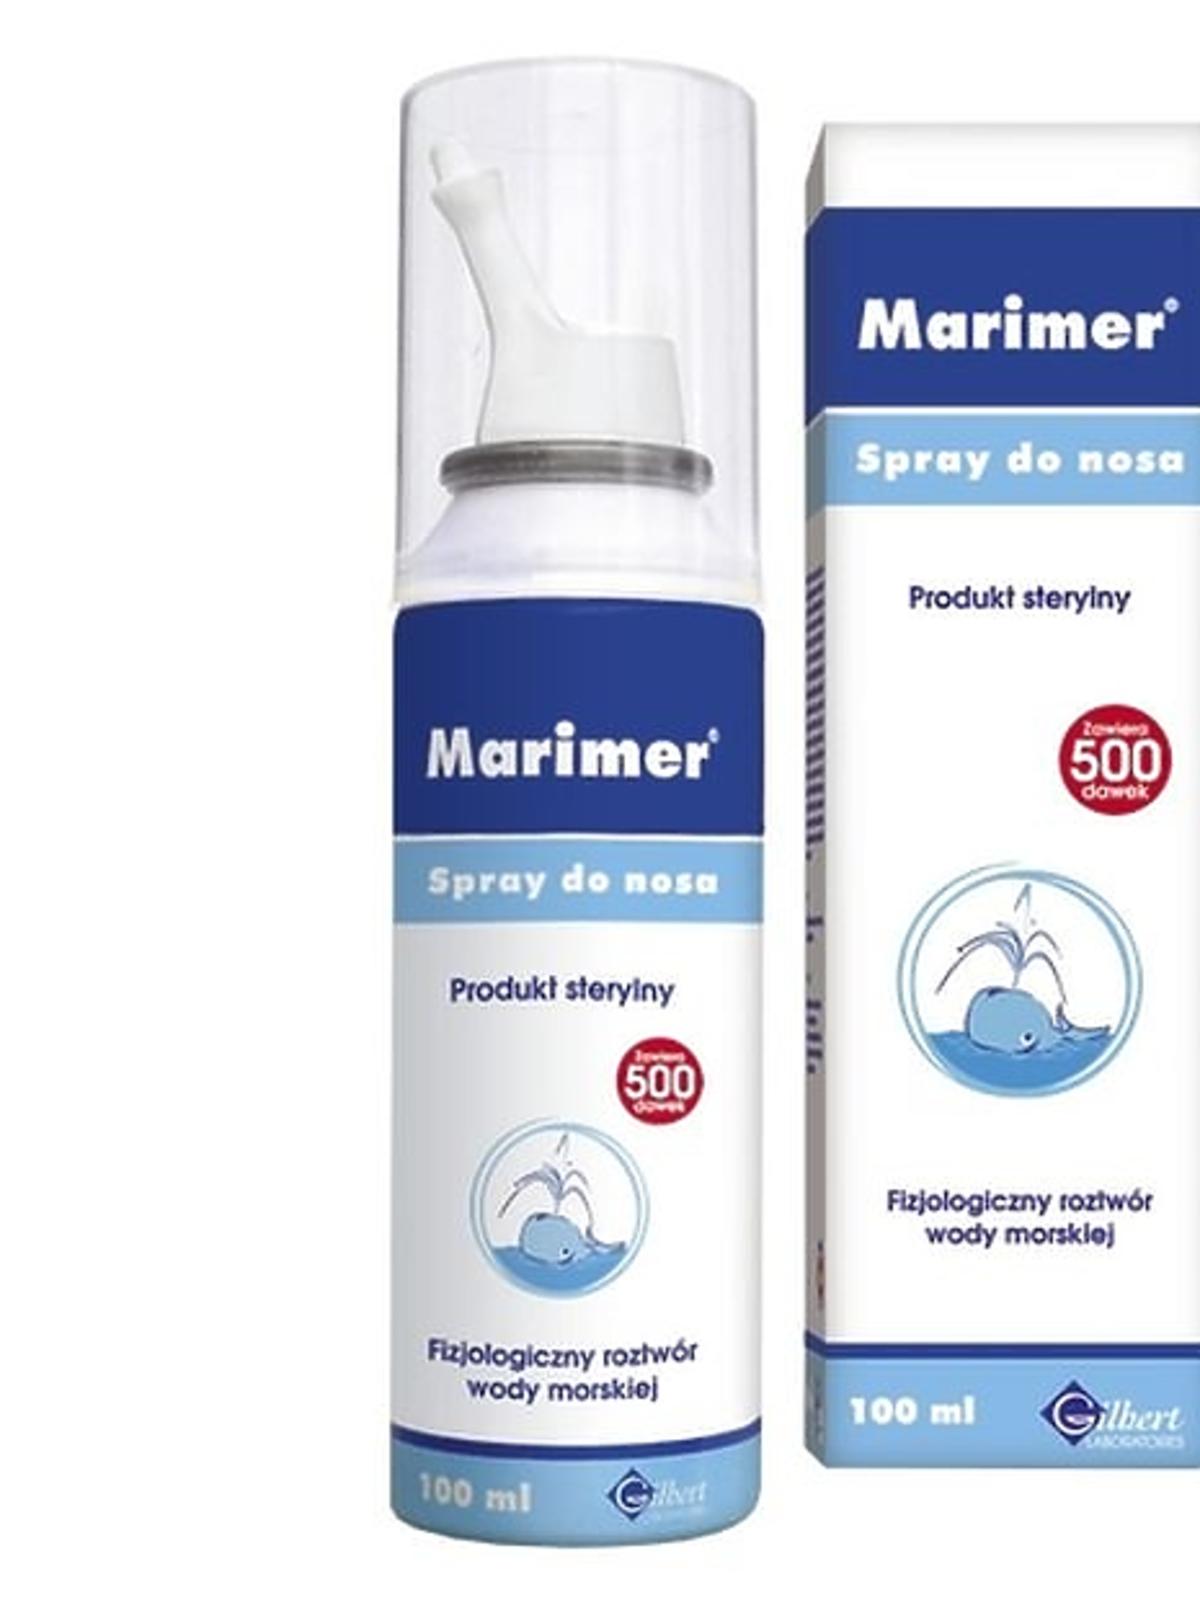 woda morska do nosa Marimer fizjologiczny roztwór wody morskiej, Laboratoires Glibert, cena ok. 21 zł